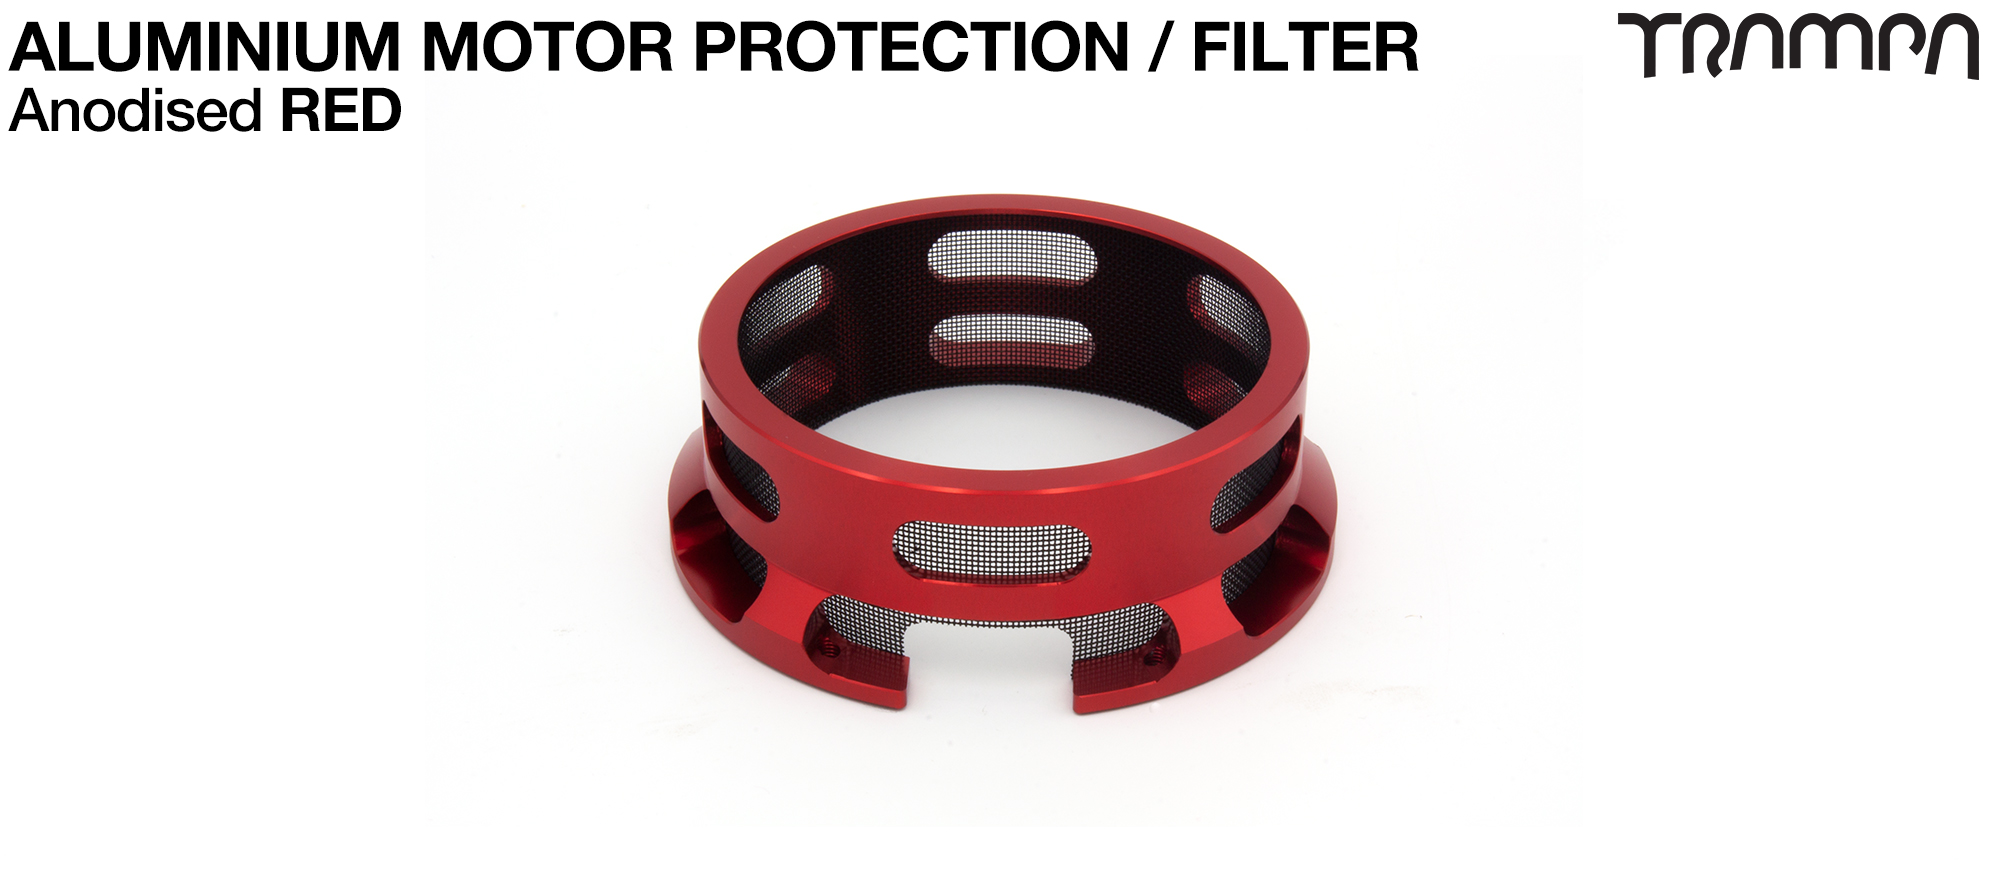 Aluminium HALF CAGE Motor protection - RED